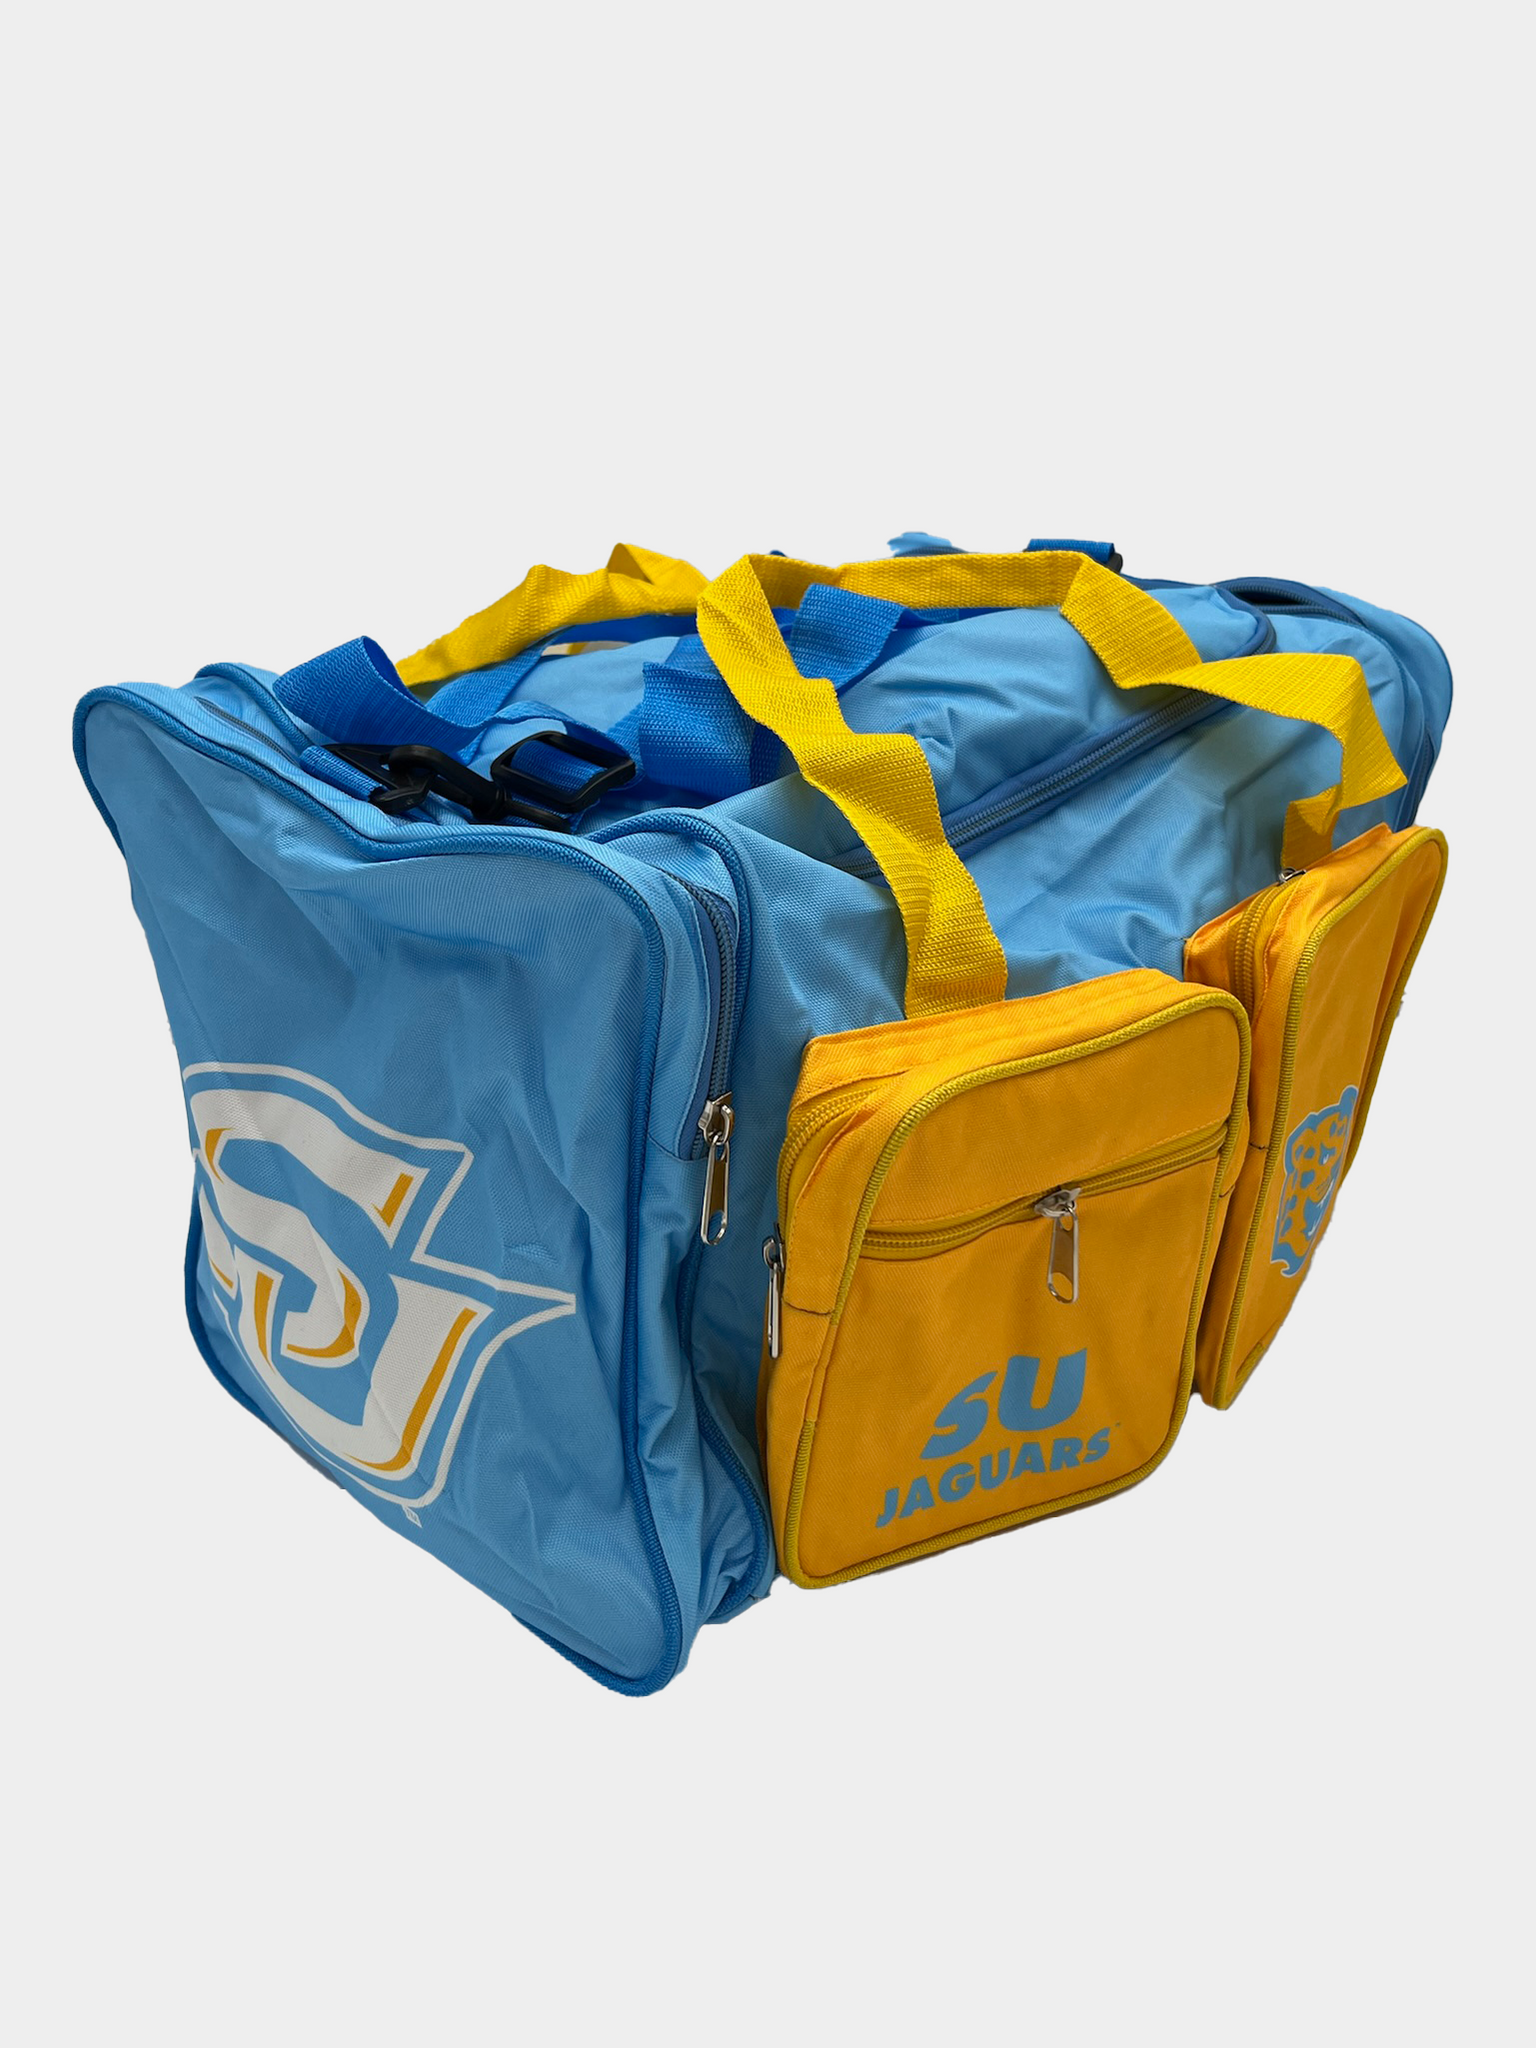 Southern Duffle Bag